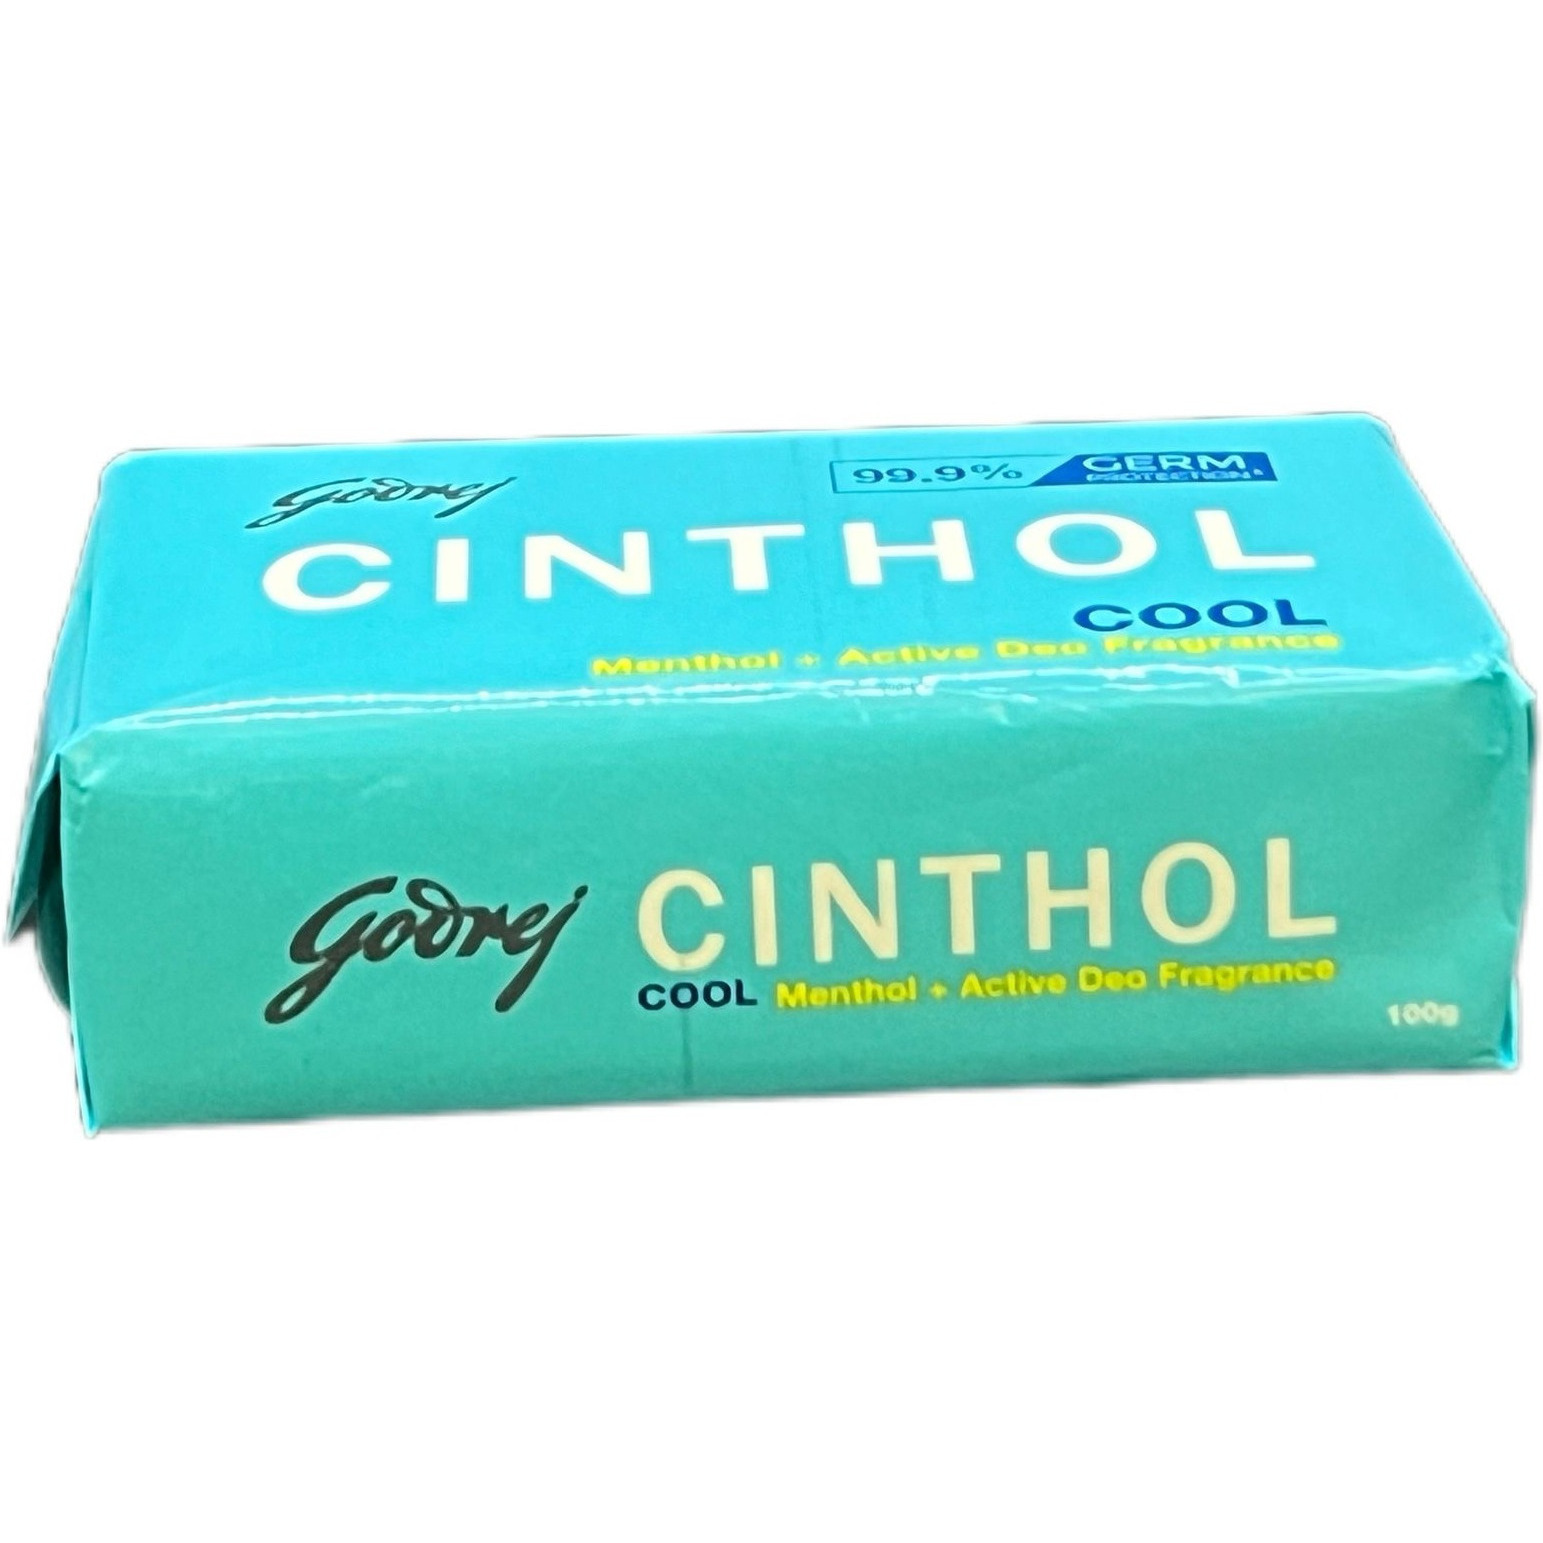 Pack of 4 - Godrej Cinthol Cool Soap - 100 Gm (3.5 Oz)